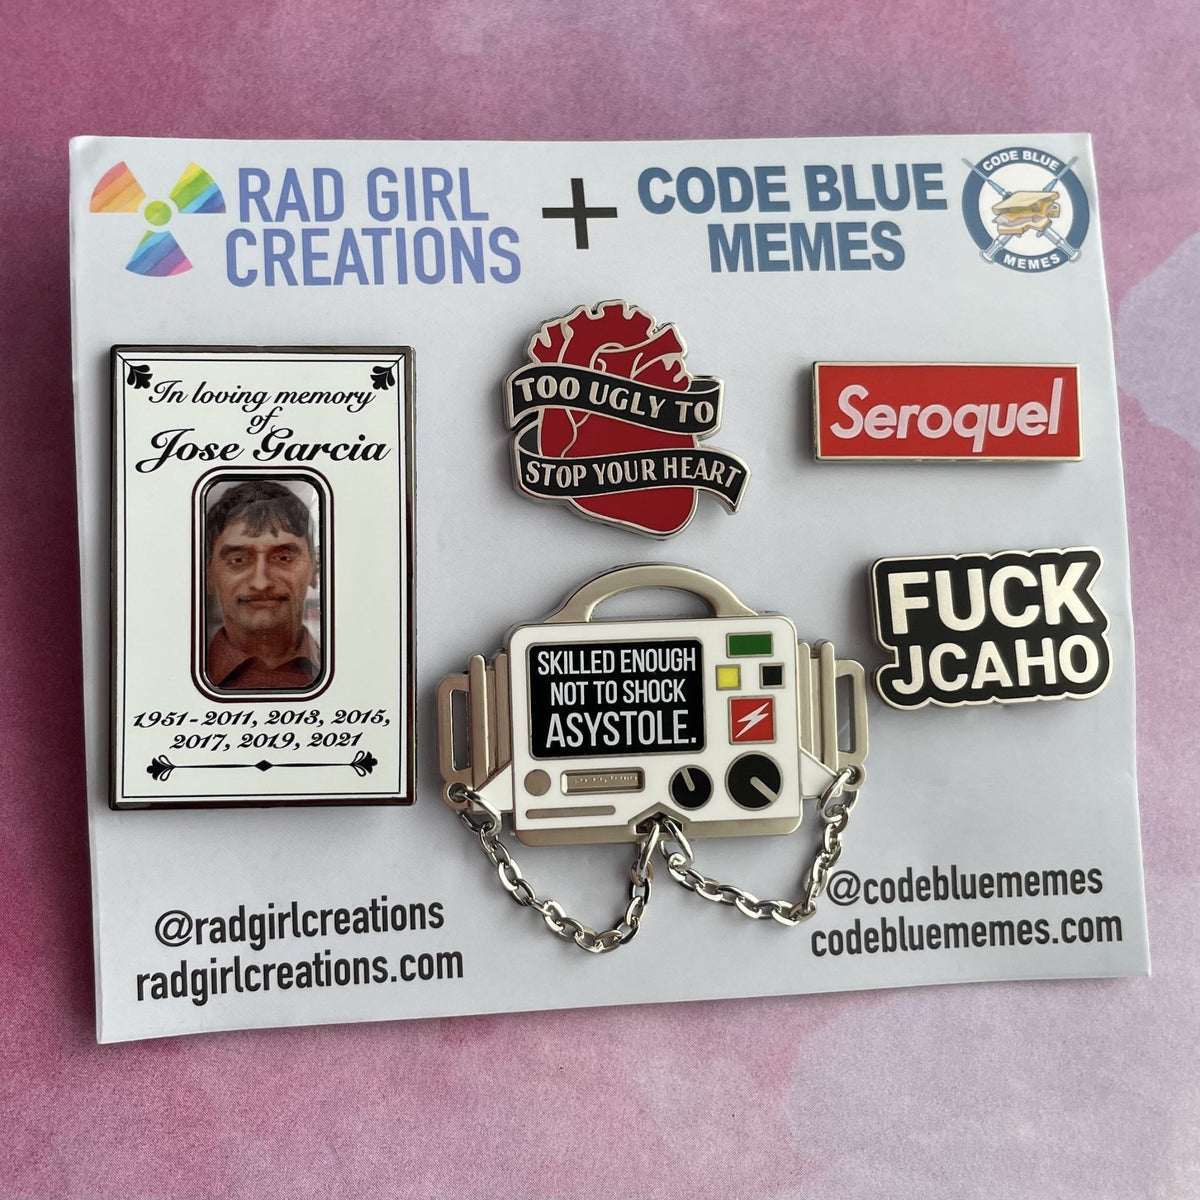 Code Blue Memes Pin Pack - Rad Girl Creations